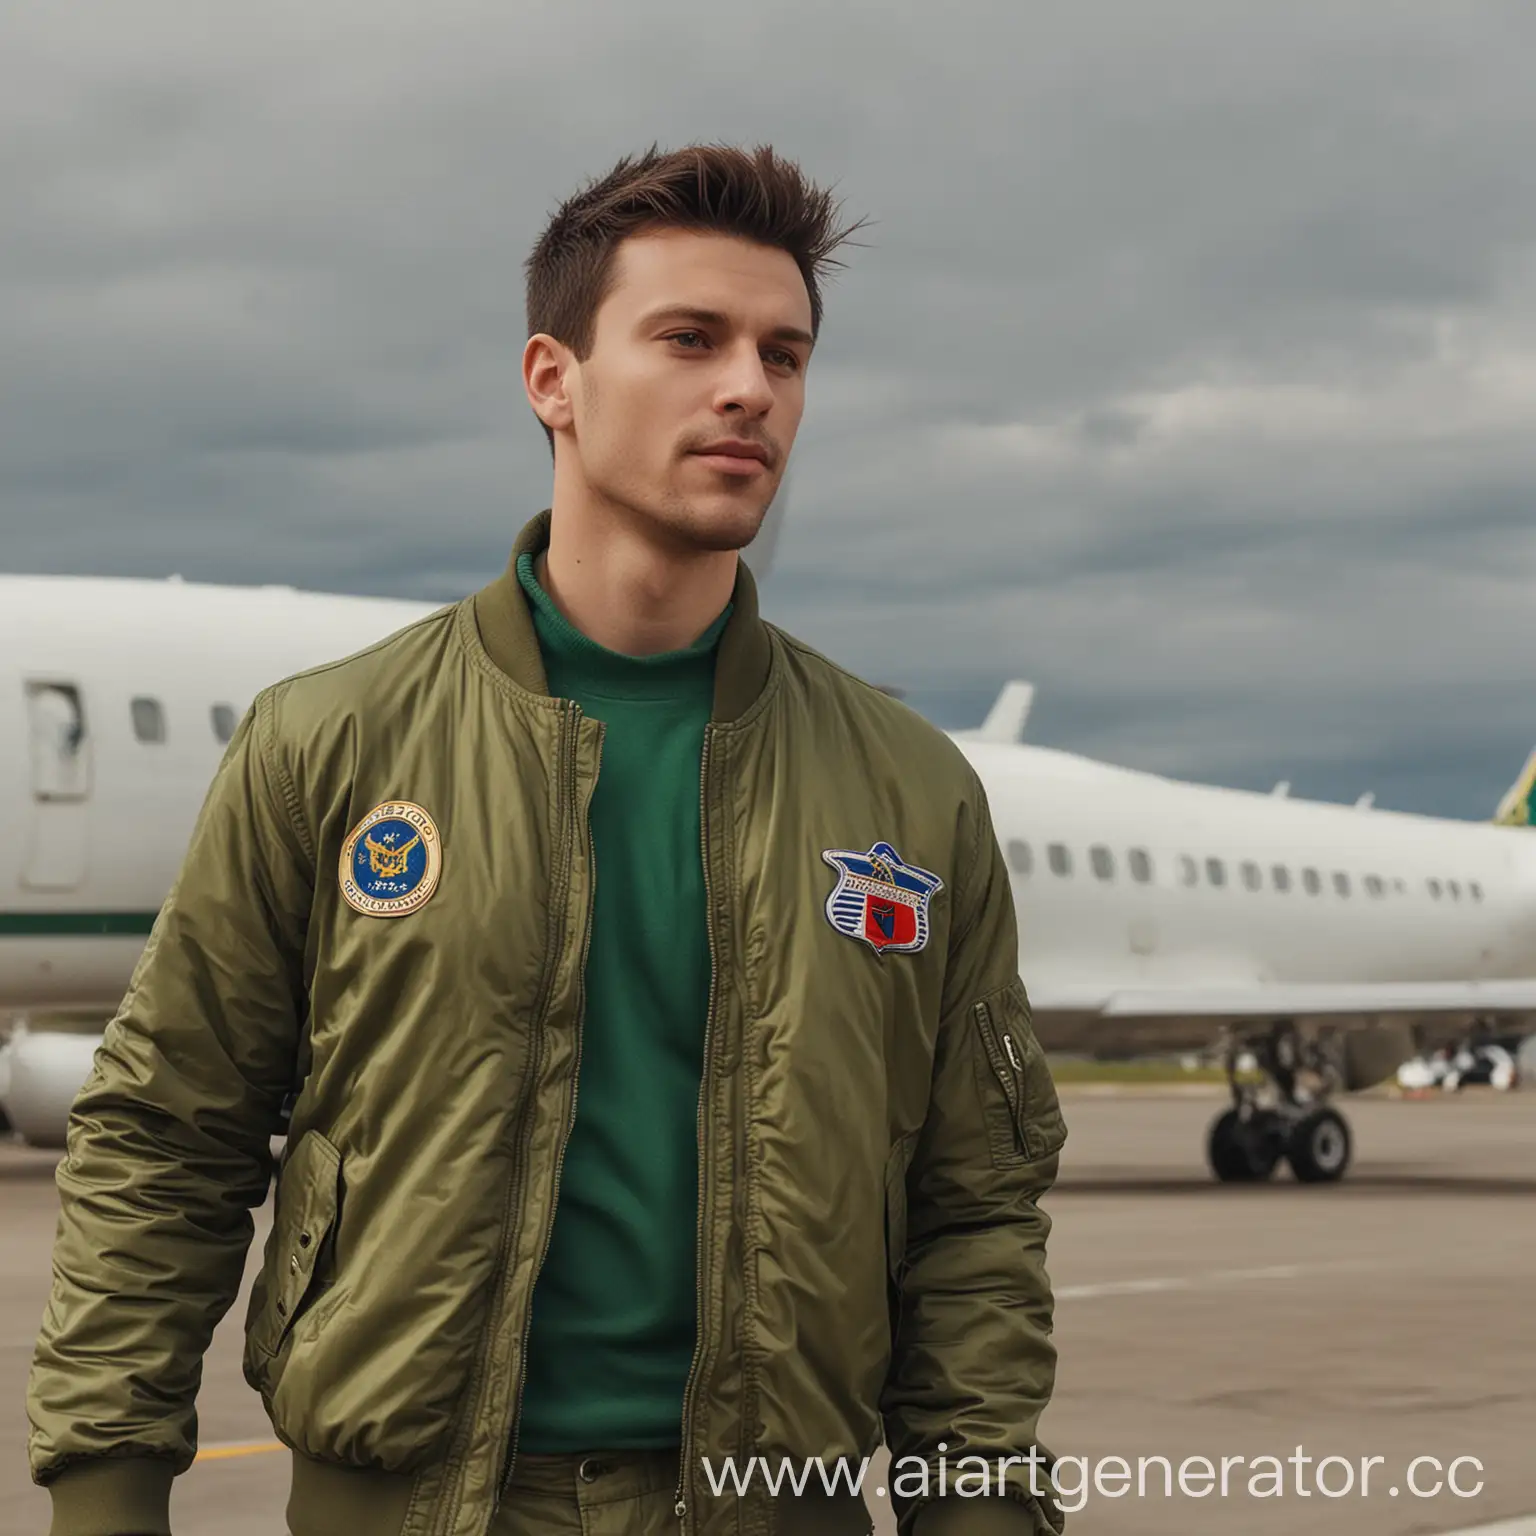 Man-in-Green-Bomber-Jacket-beside-Airplane